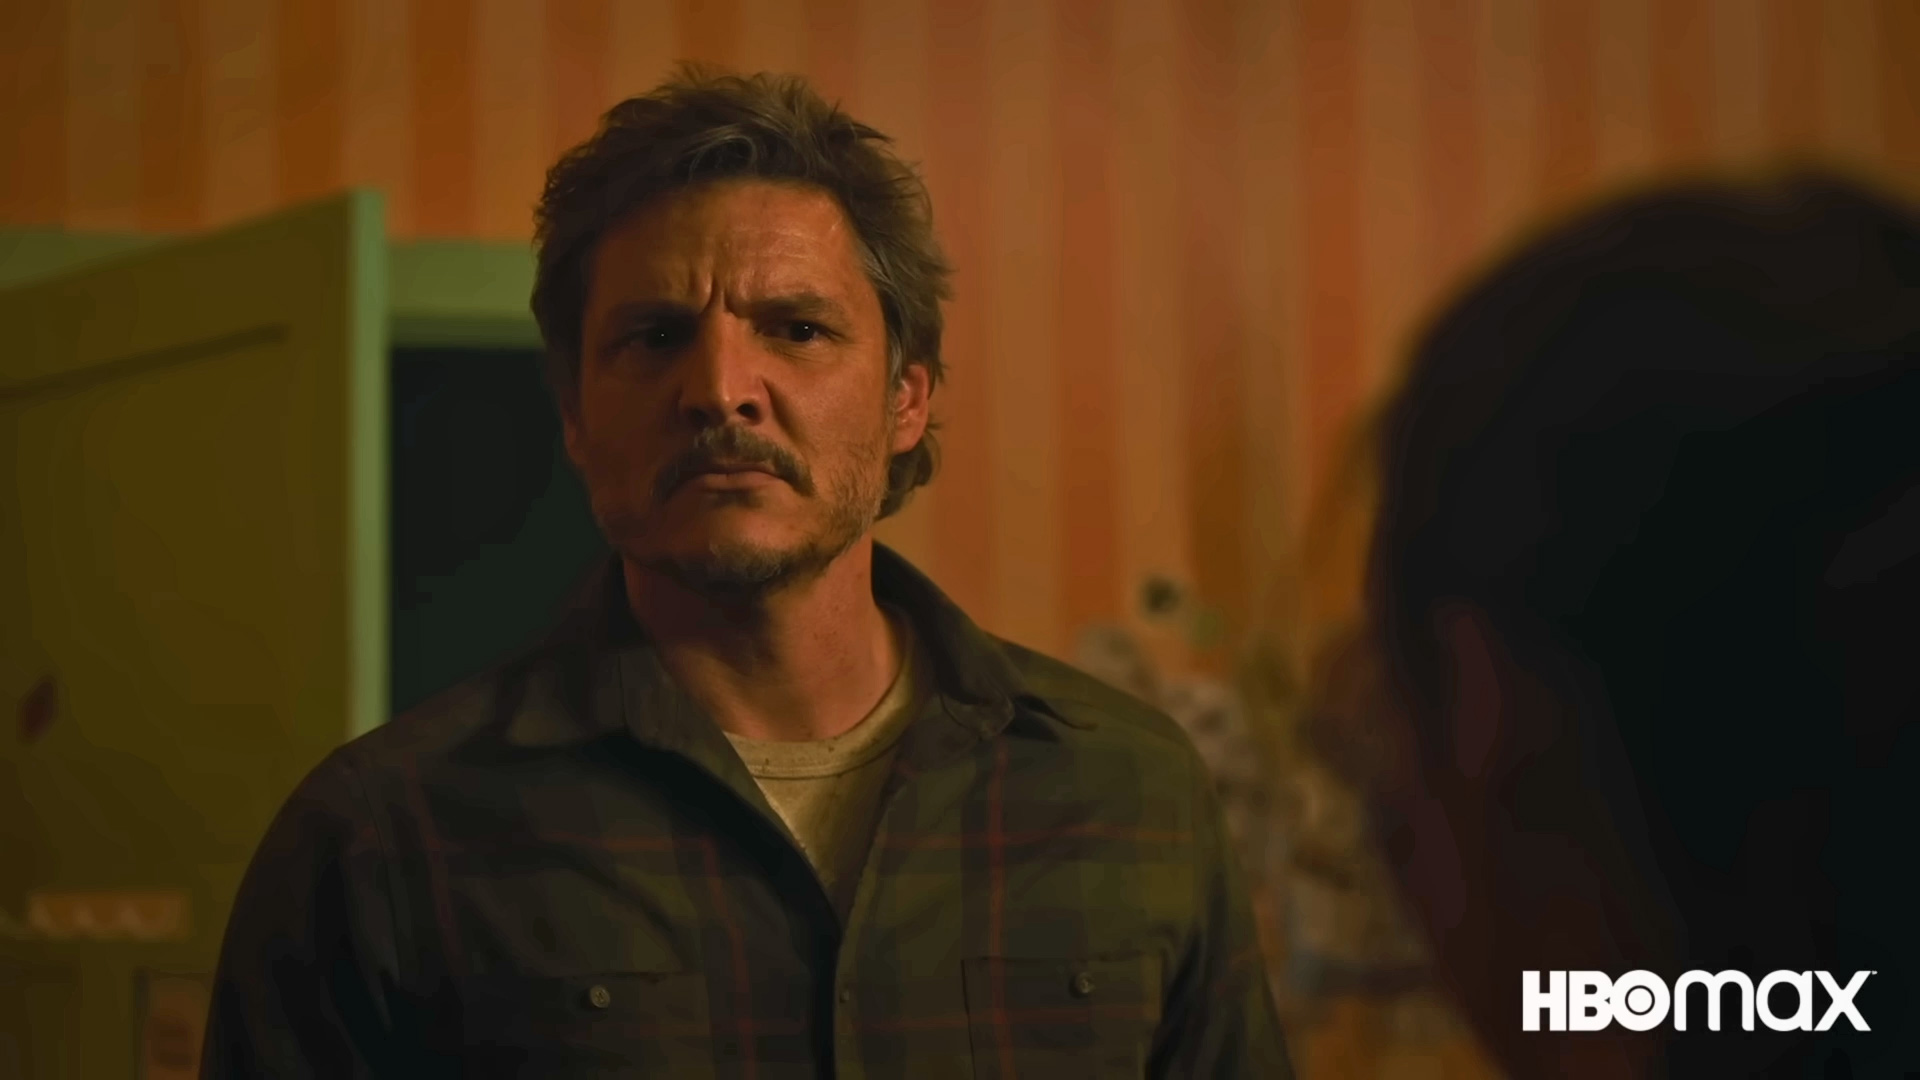 HBO toont uitgebreide trailer op The Last of Us Day